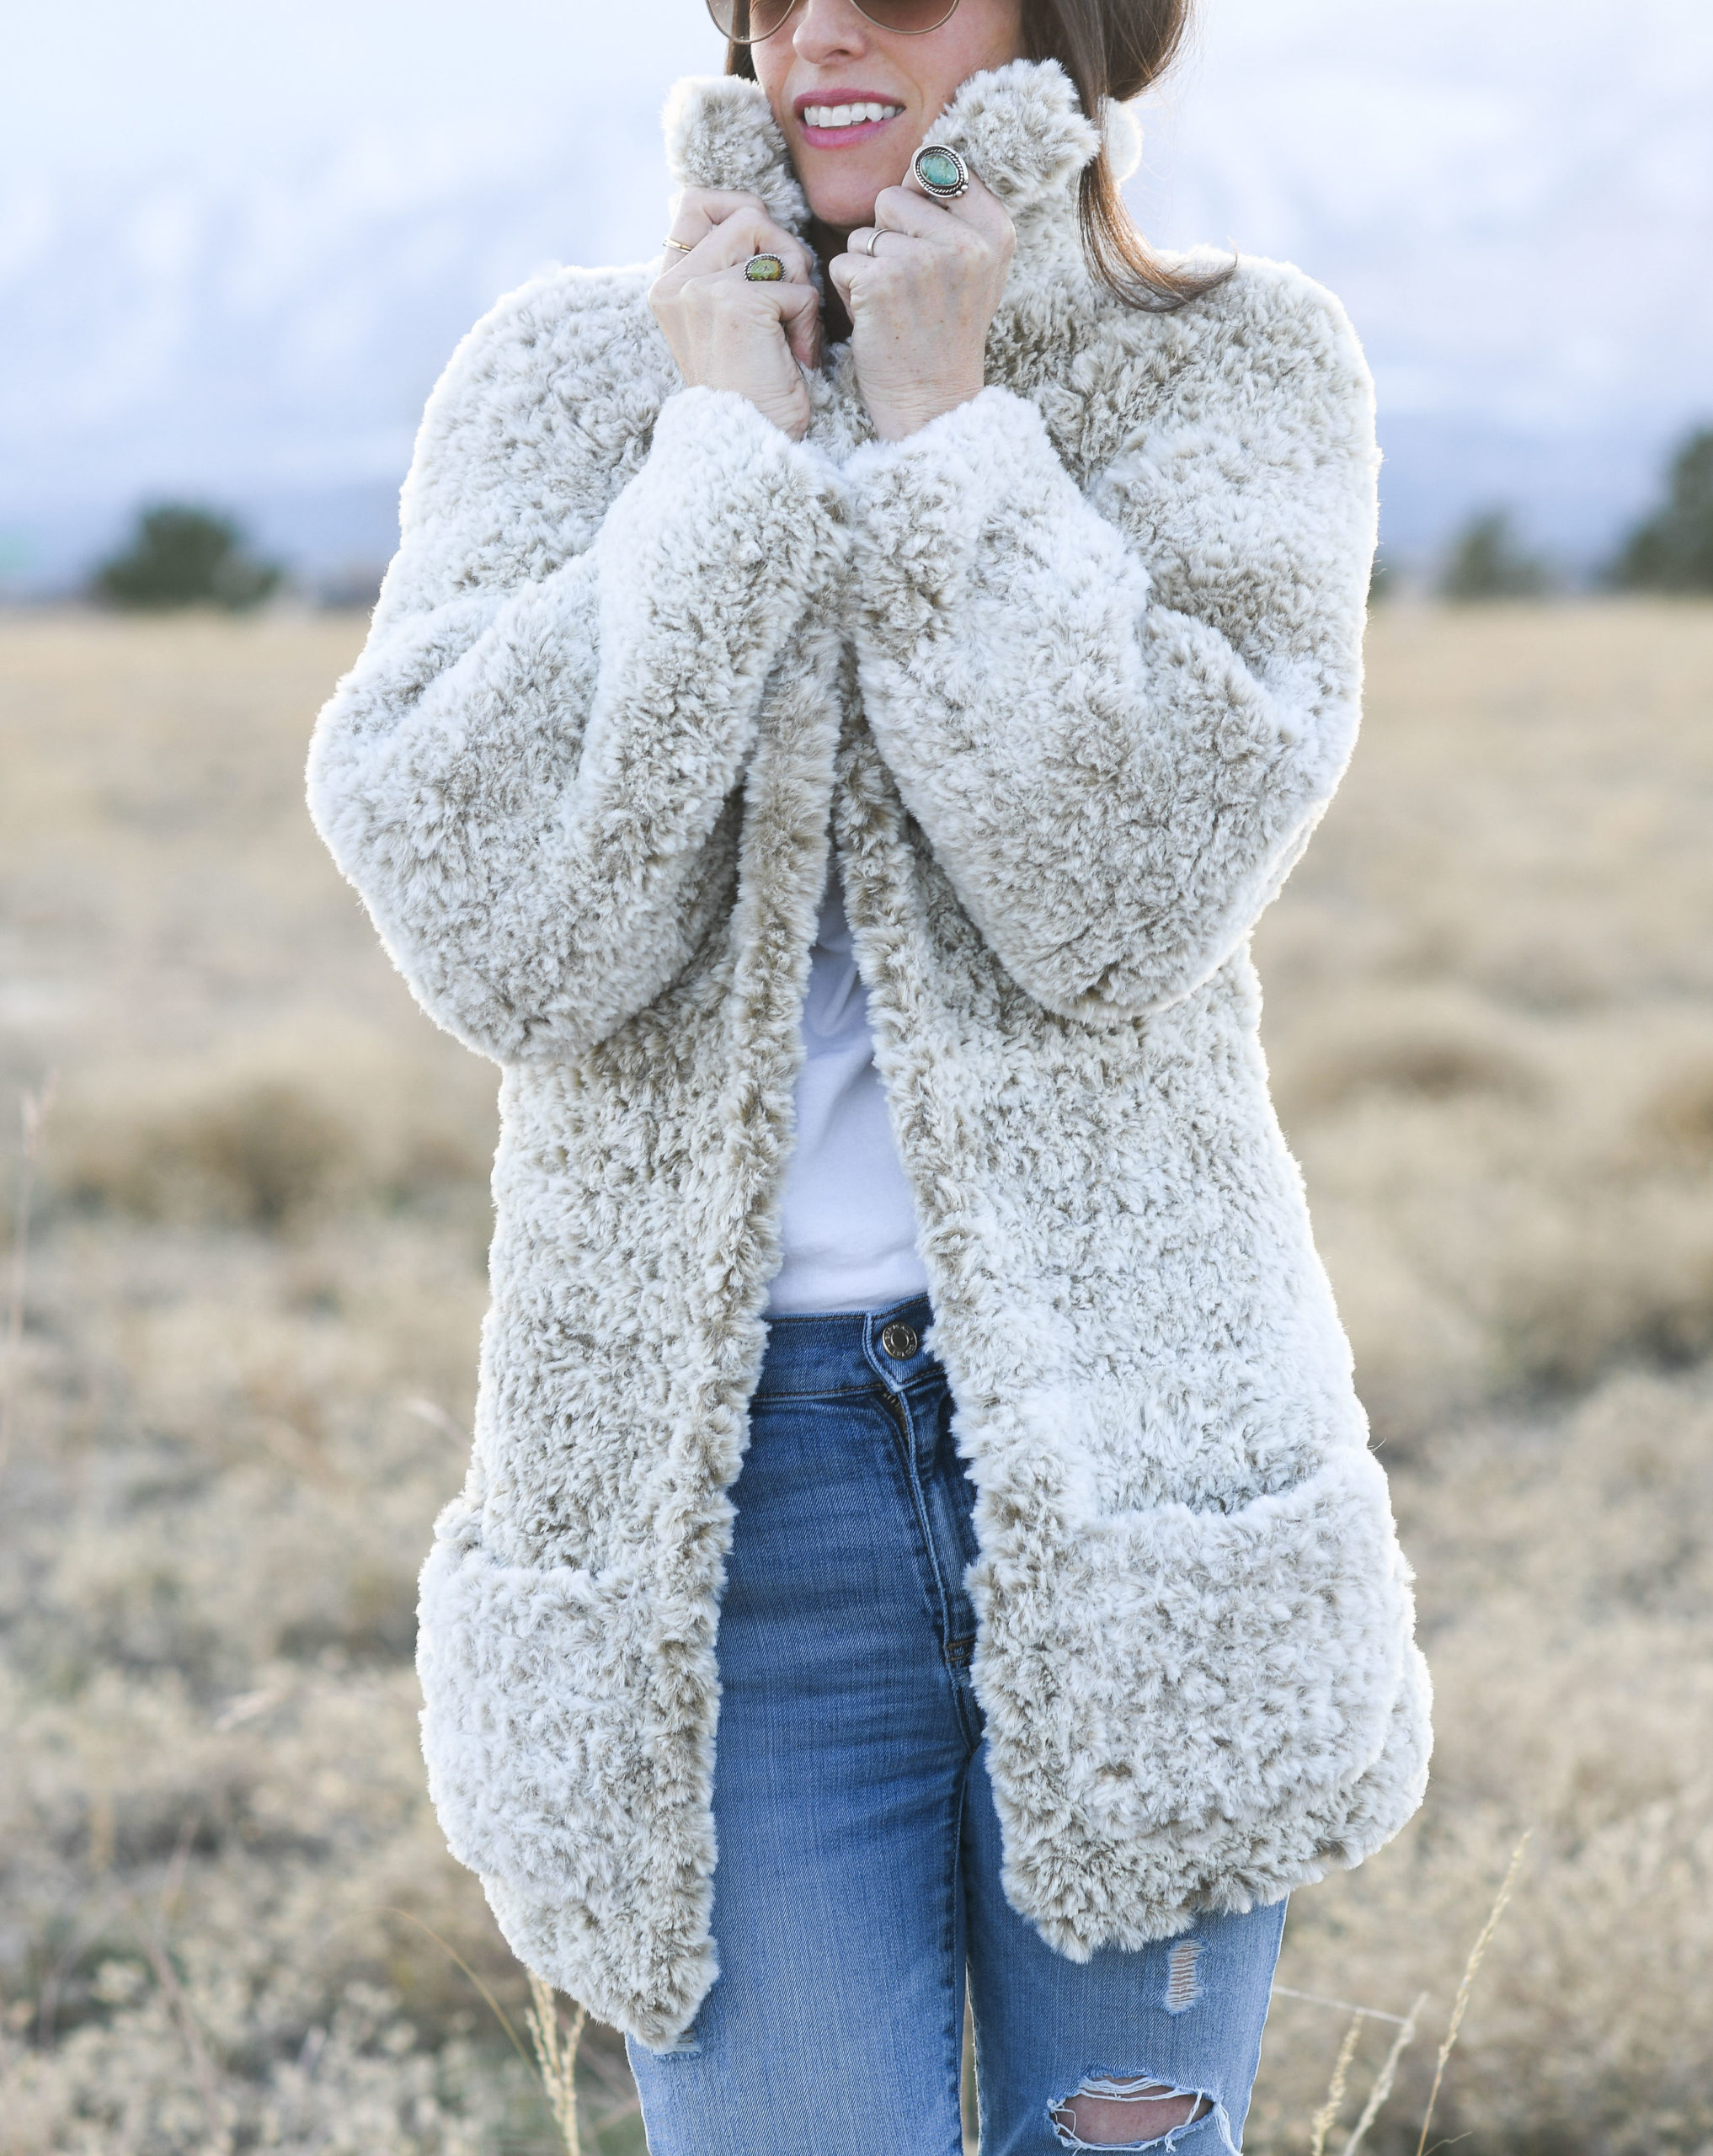 Soft & Stylish: 15 Faux Fur Crochet Patterns - I Can Crochet That